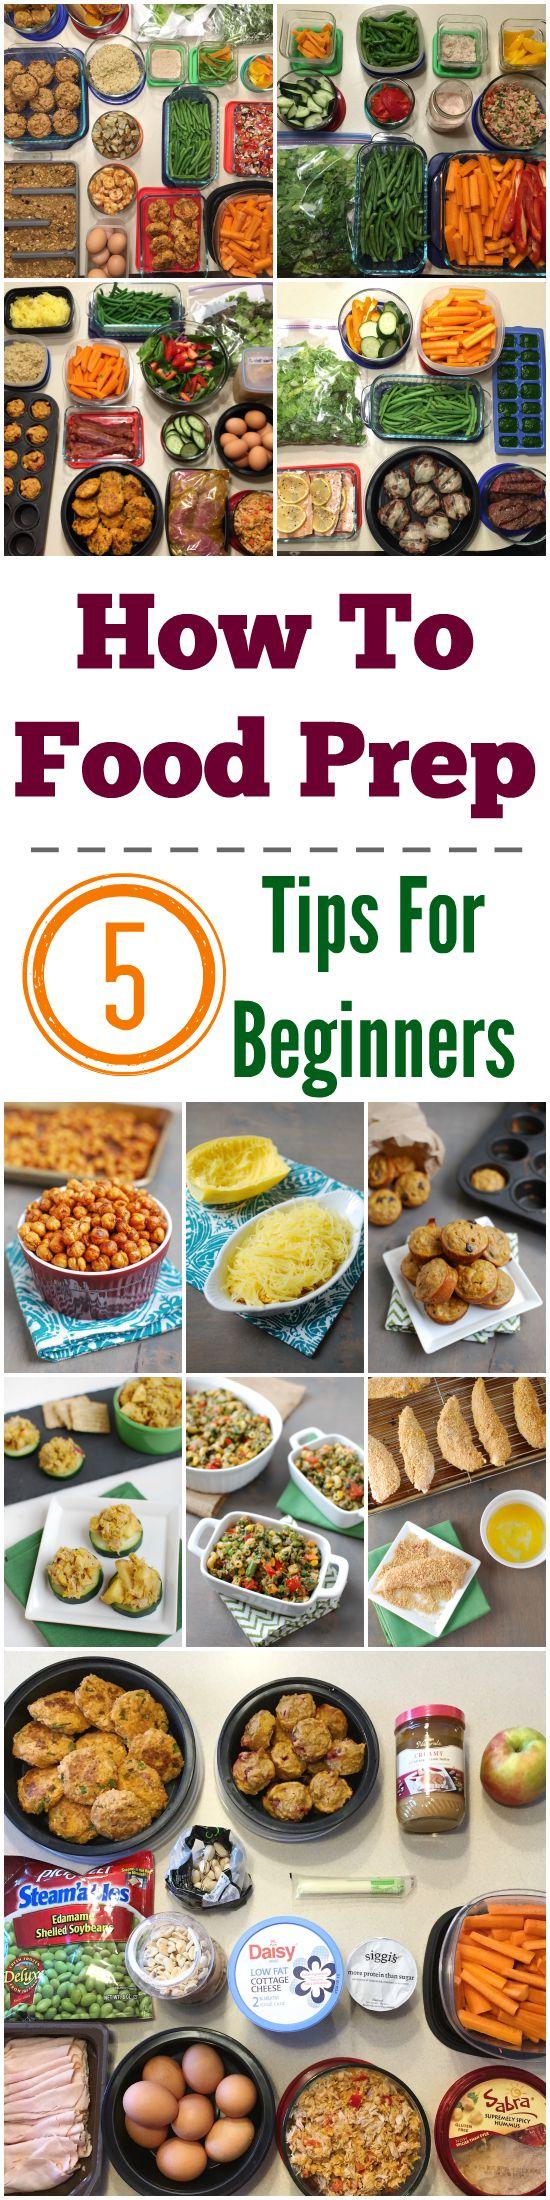 https://www.theleangreenbean.com/wp-content/uploads/2015/07/food-prep-tips-for-beginners.jpg